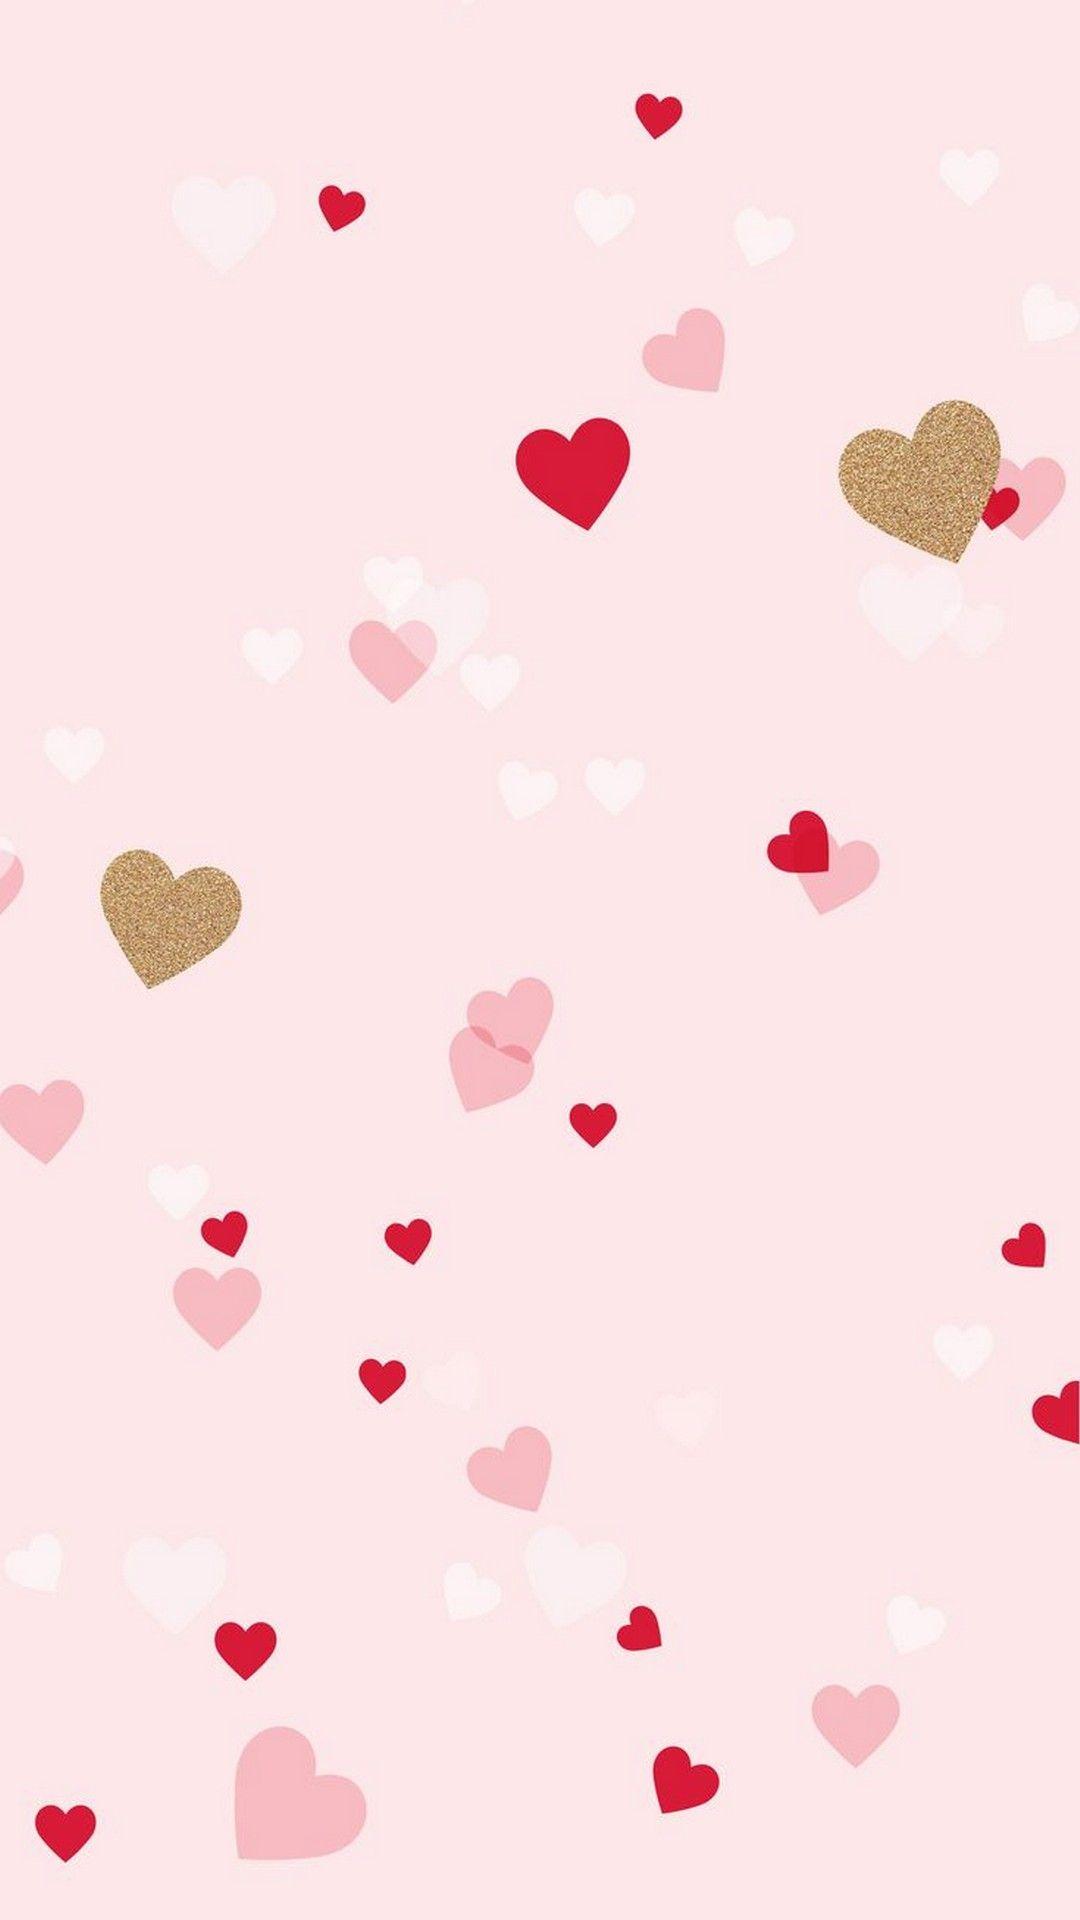 Tumblr Valentine's Day Wallpaper Free Tumblr Valentine's Day Background